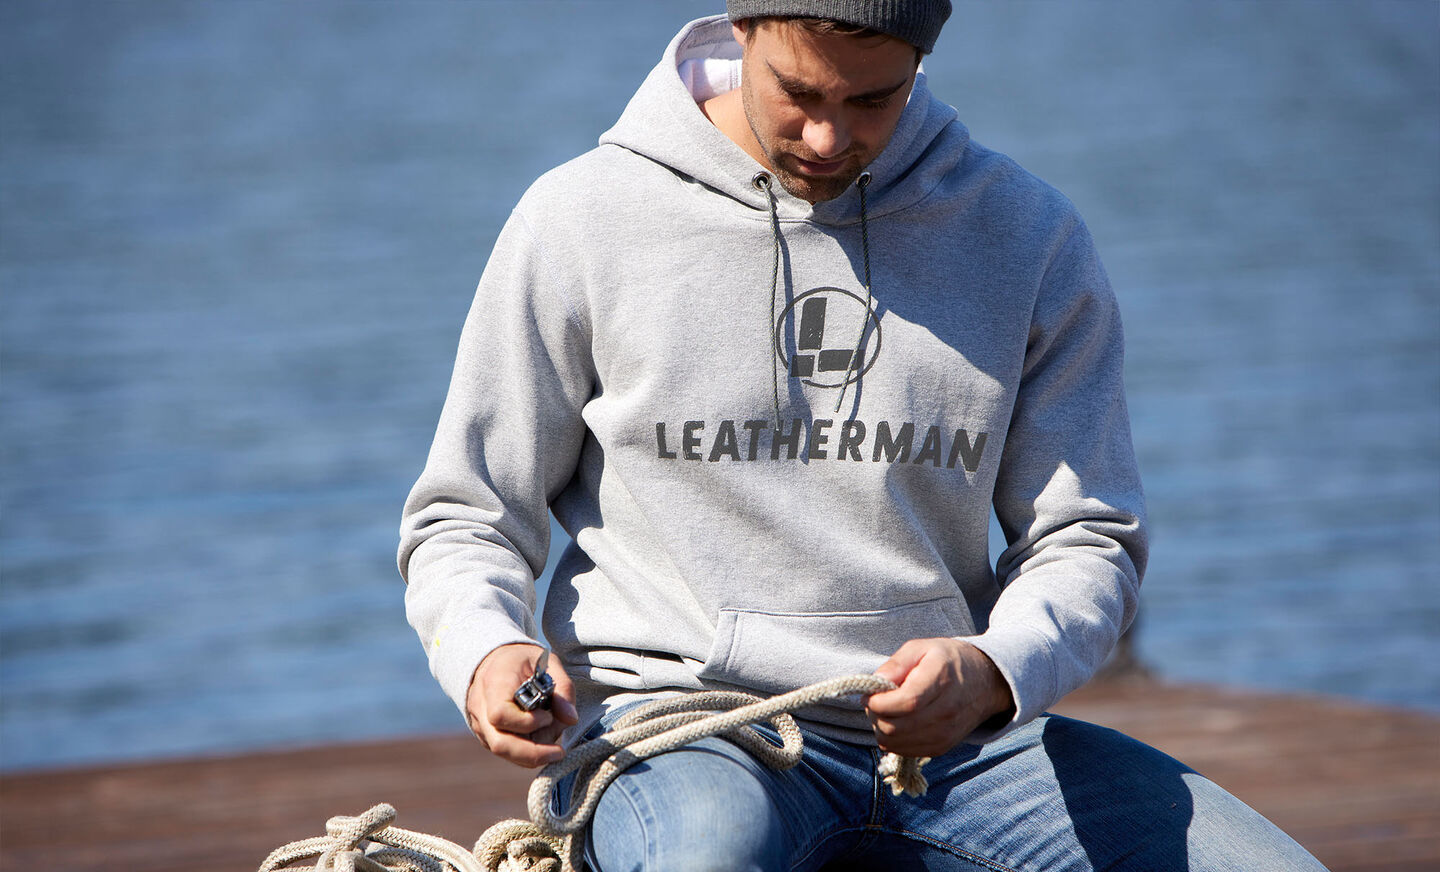 Mean wearing dark gray beanie, gray Leatherman logo hoodie on deck cutting rope with Leatherman tool 